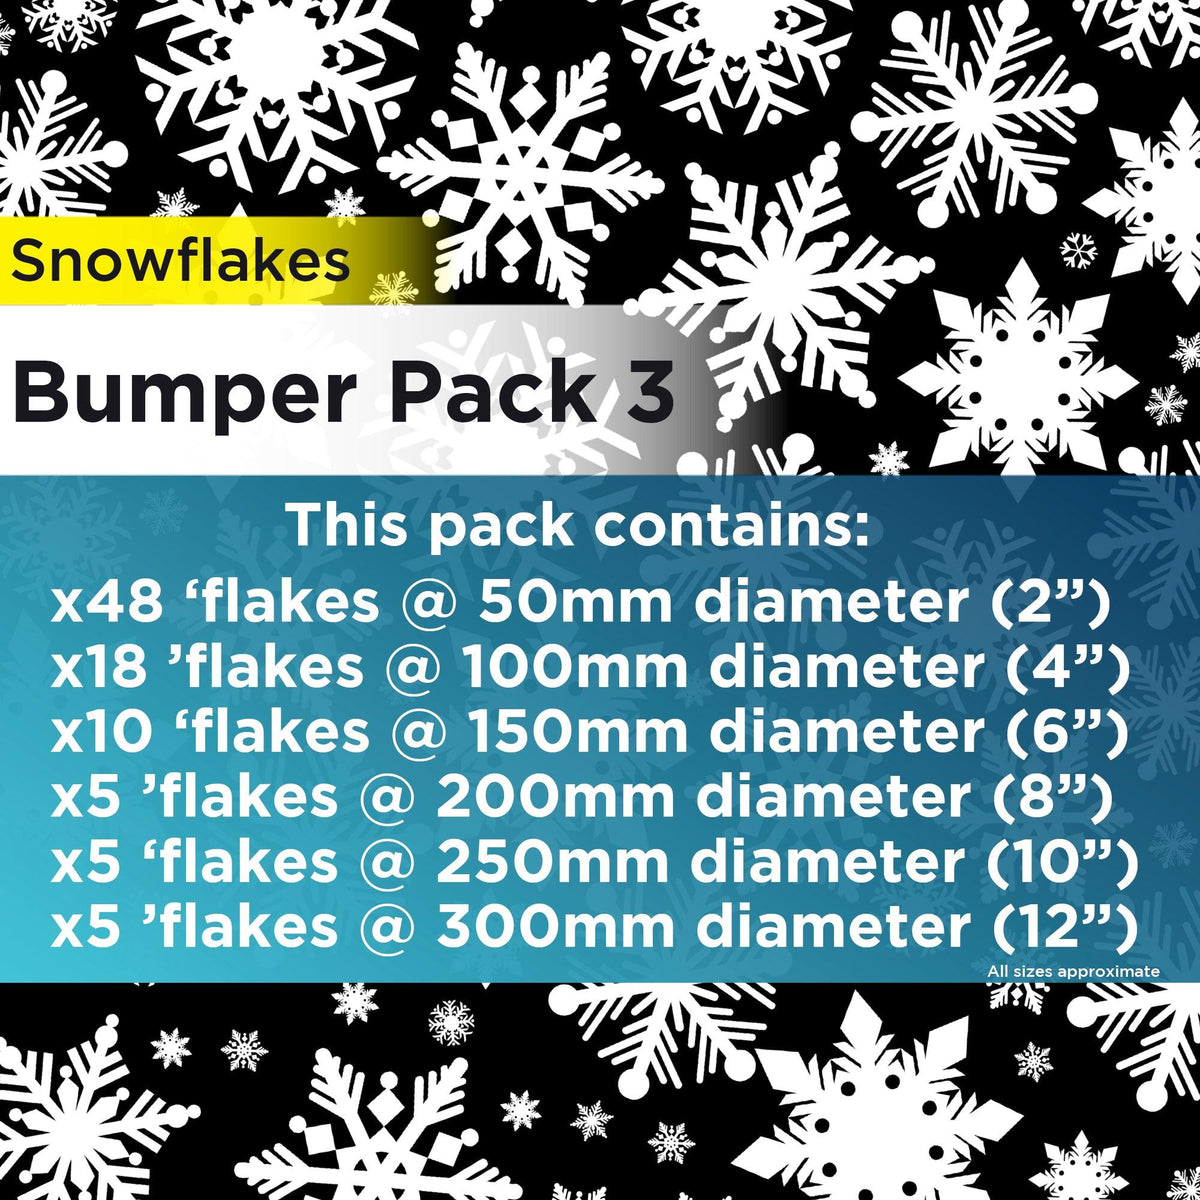 Snowflake Window Stickers: Bumper Pack 3 Christmas Window Display